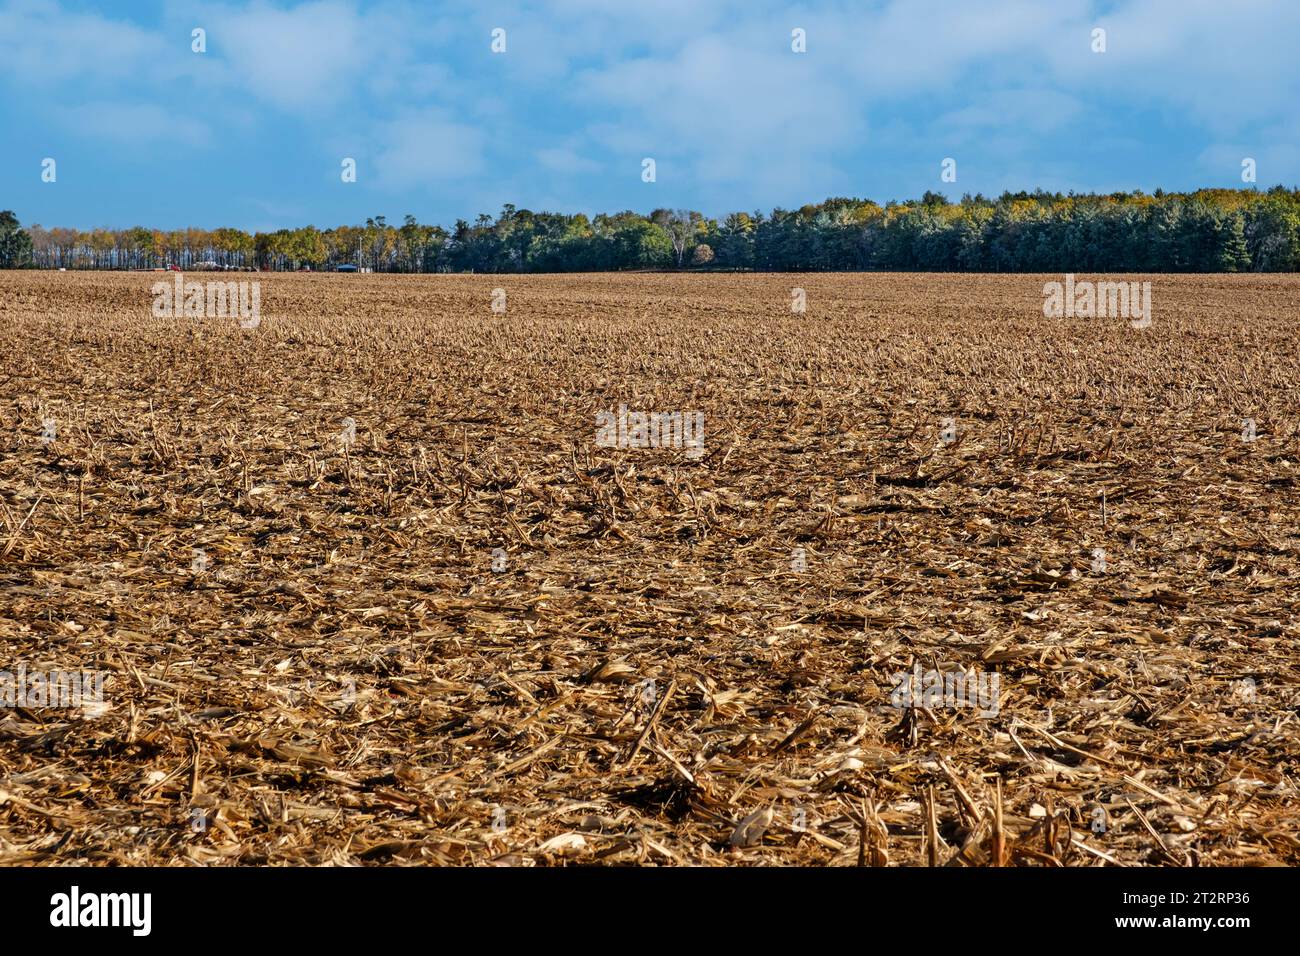 Iowa Cornfield After Fall Harvest, long Grove, Iowa, États-Unis. Banque D'Images